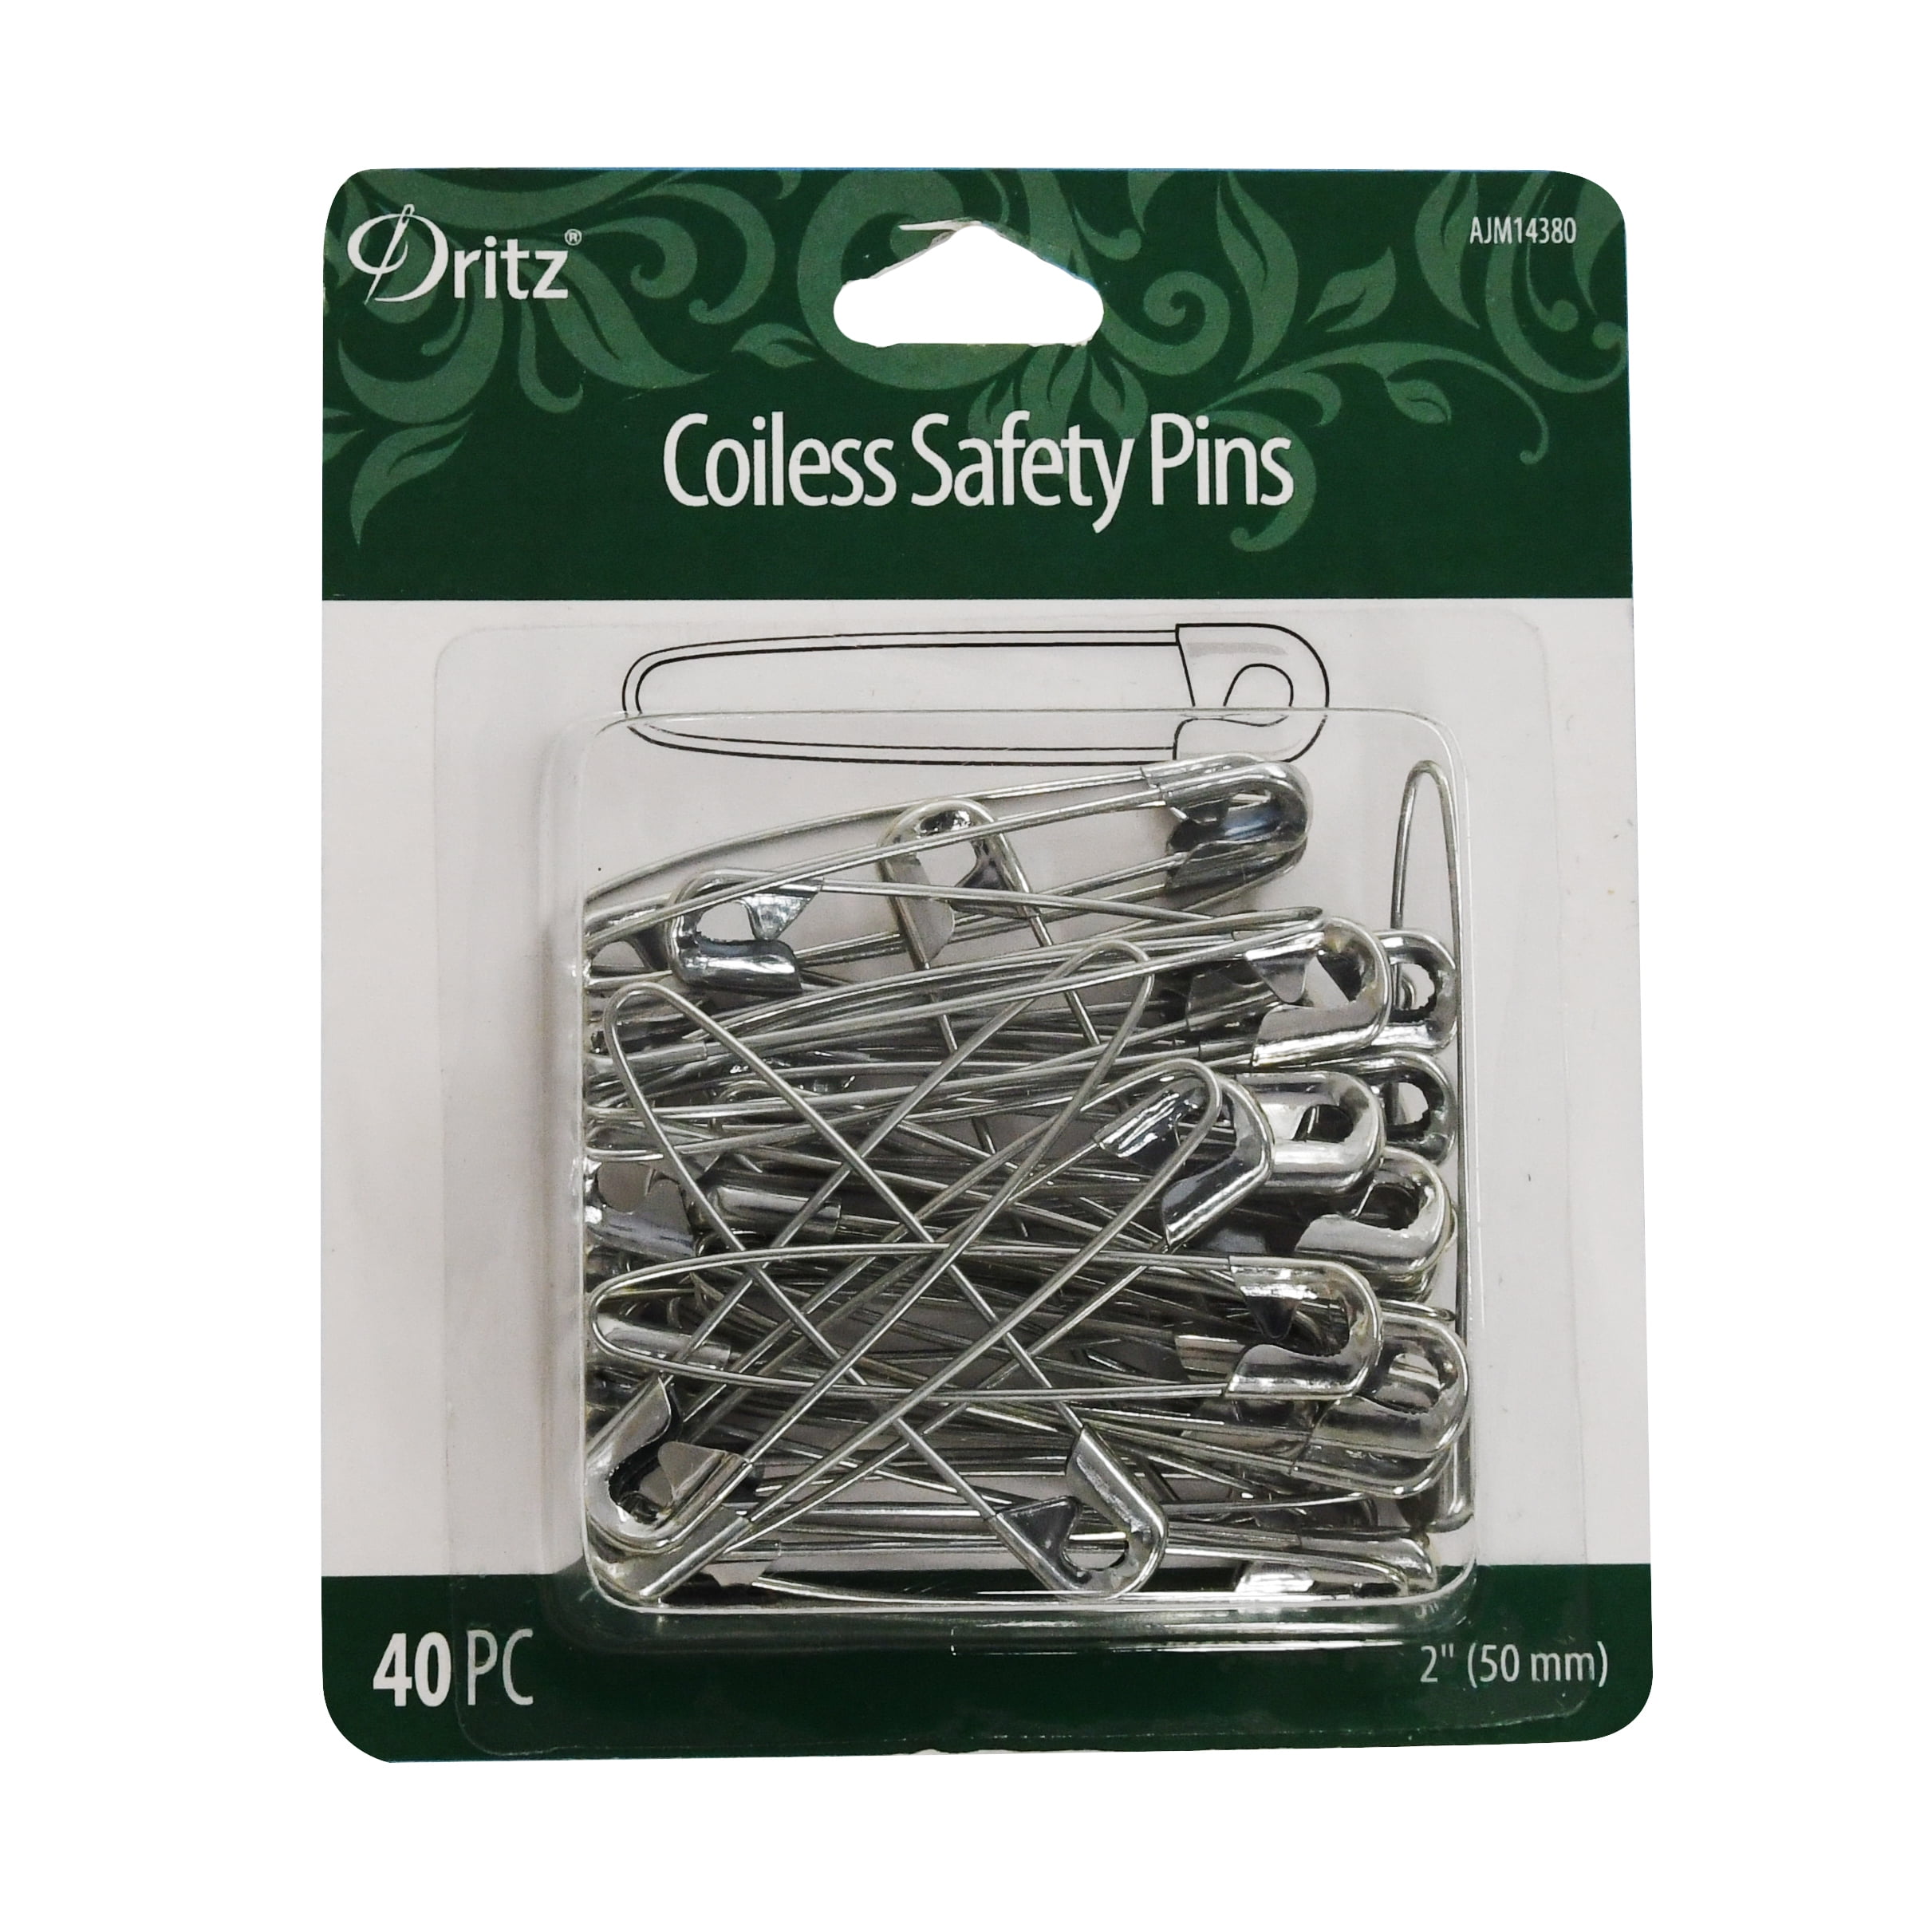 Dritz 2 Safety Pins Coiless, 40 Piece